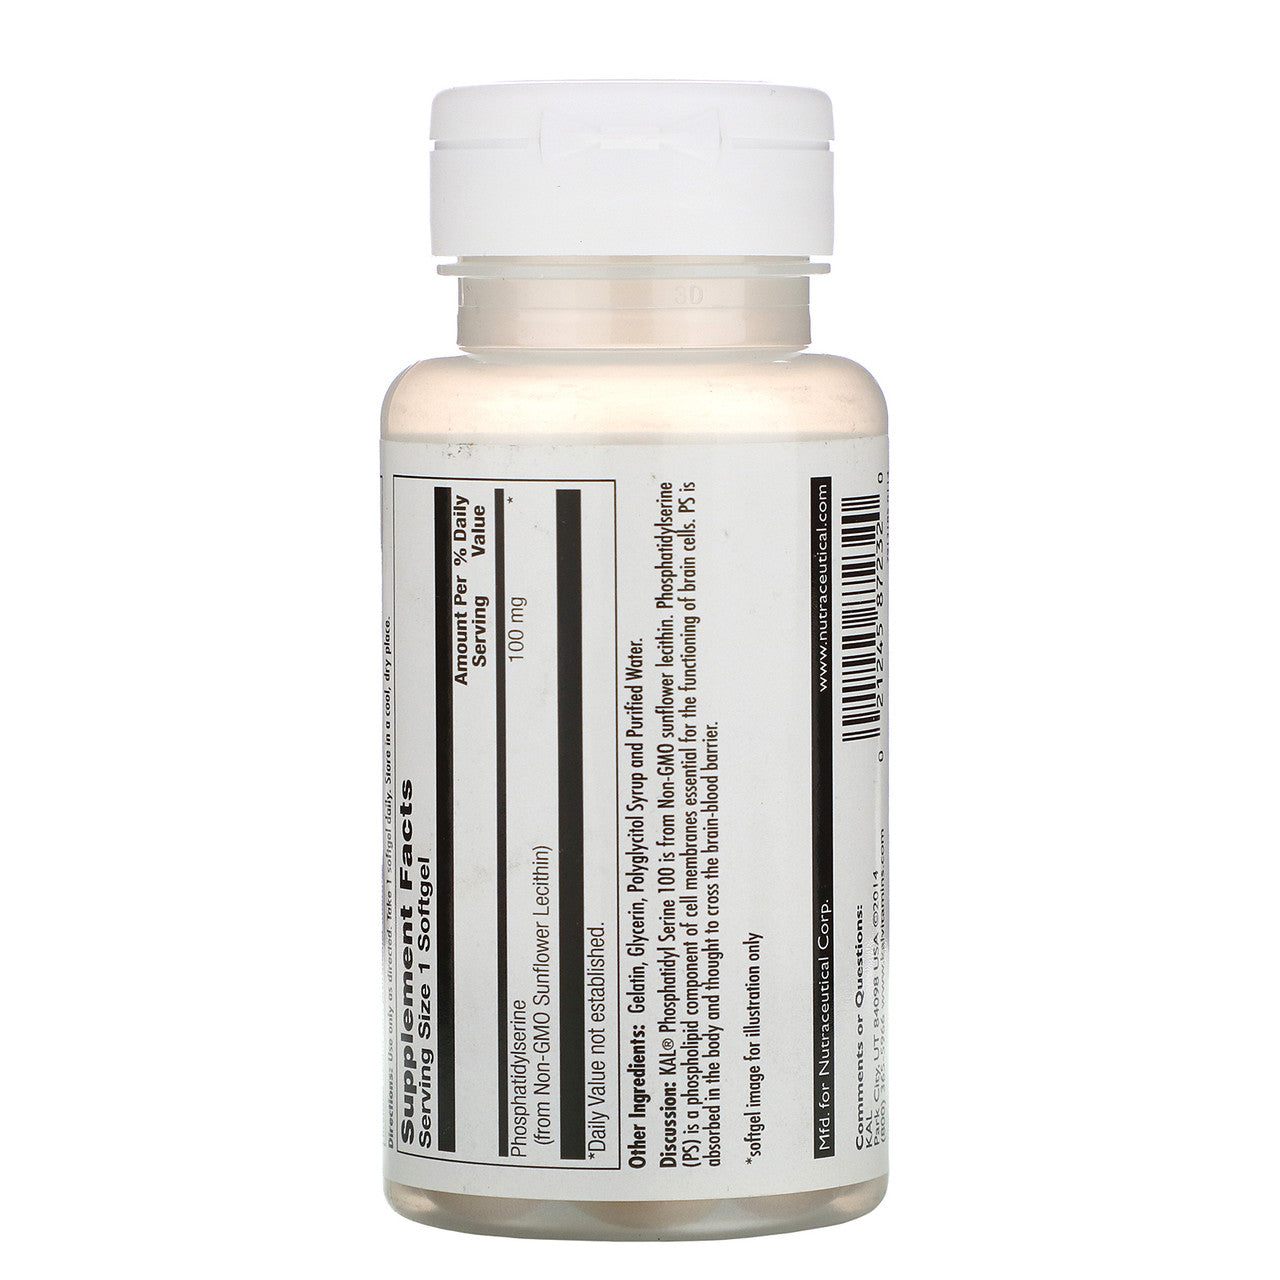 KAL Phosphatidyl Serine 100 Supplement Facts Label